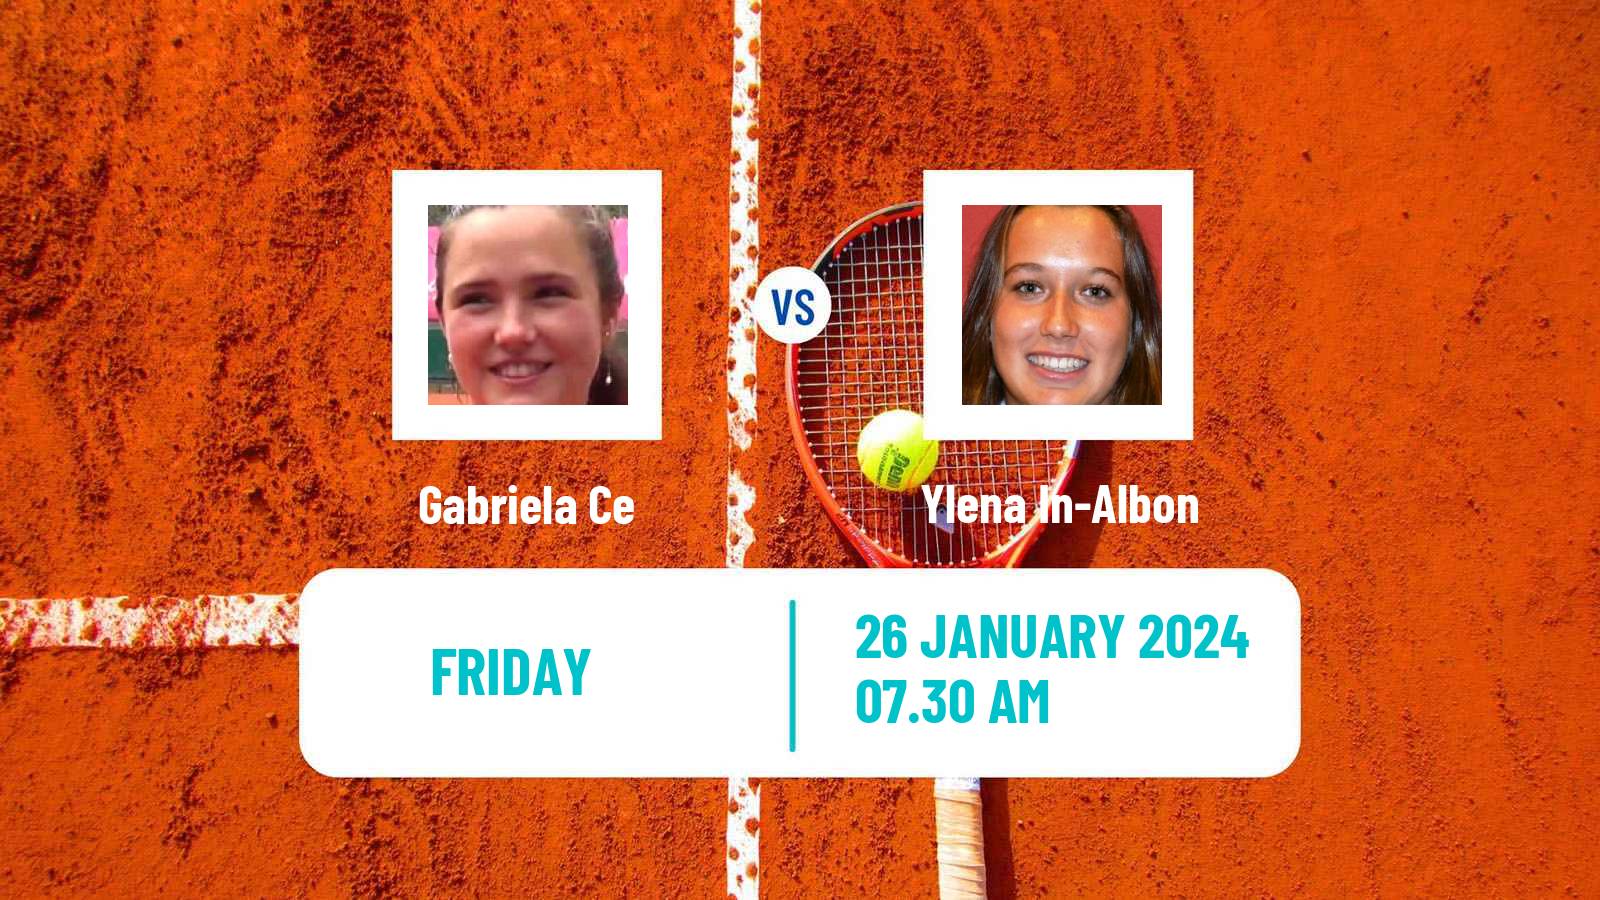 Tennis ITF W35 Buenos Aires 2 Women Gabriela Ce - Ylena In-Albon